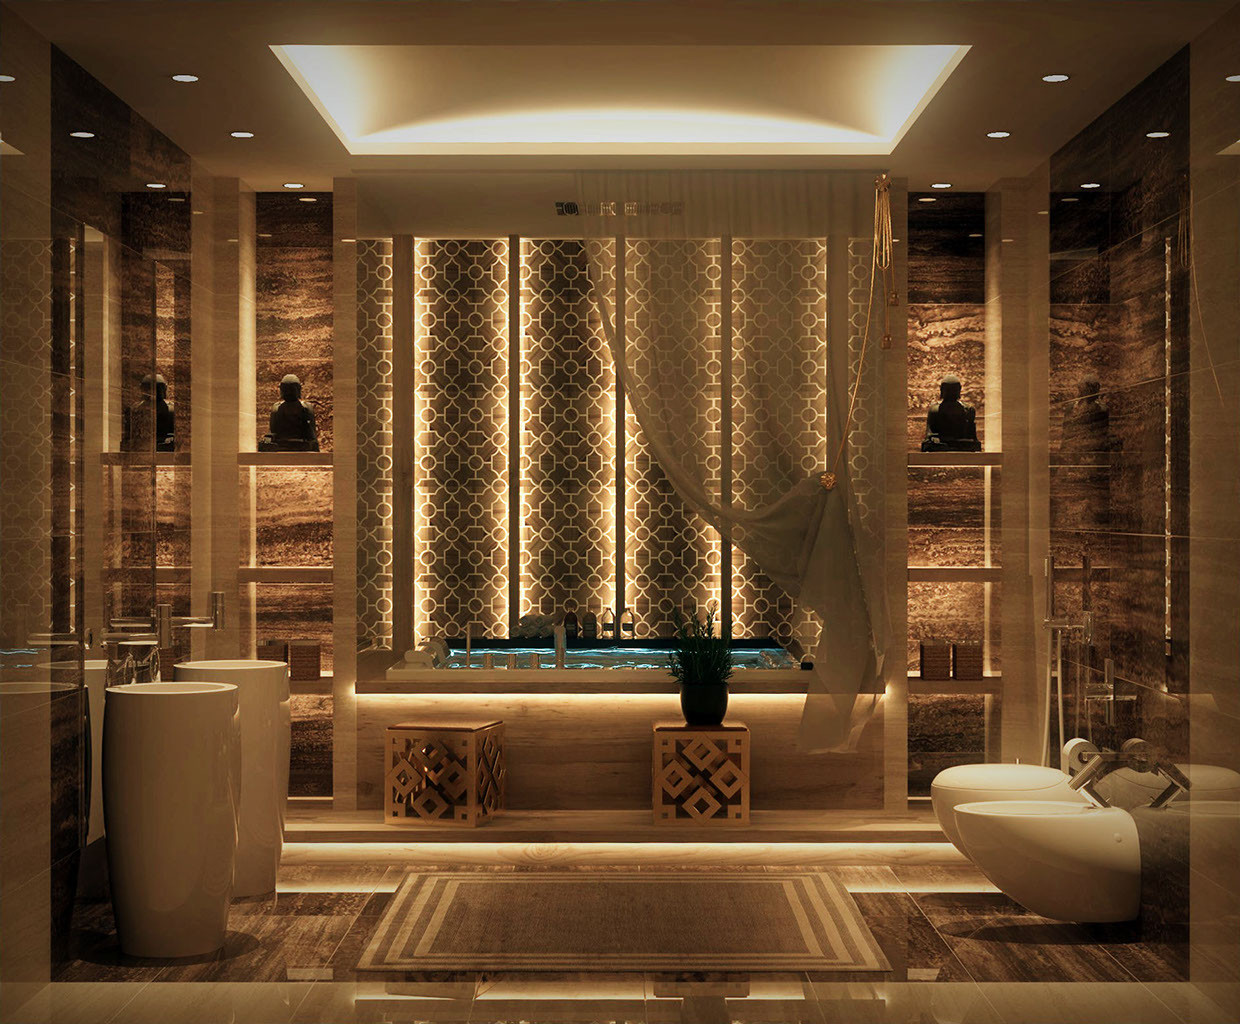 Luxury Bathroom Designs Gallery
 Luxurious Bathrooms with Stunning Design Details